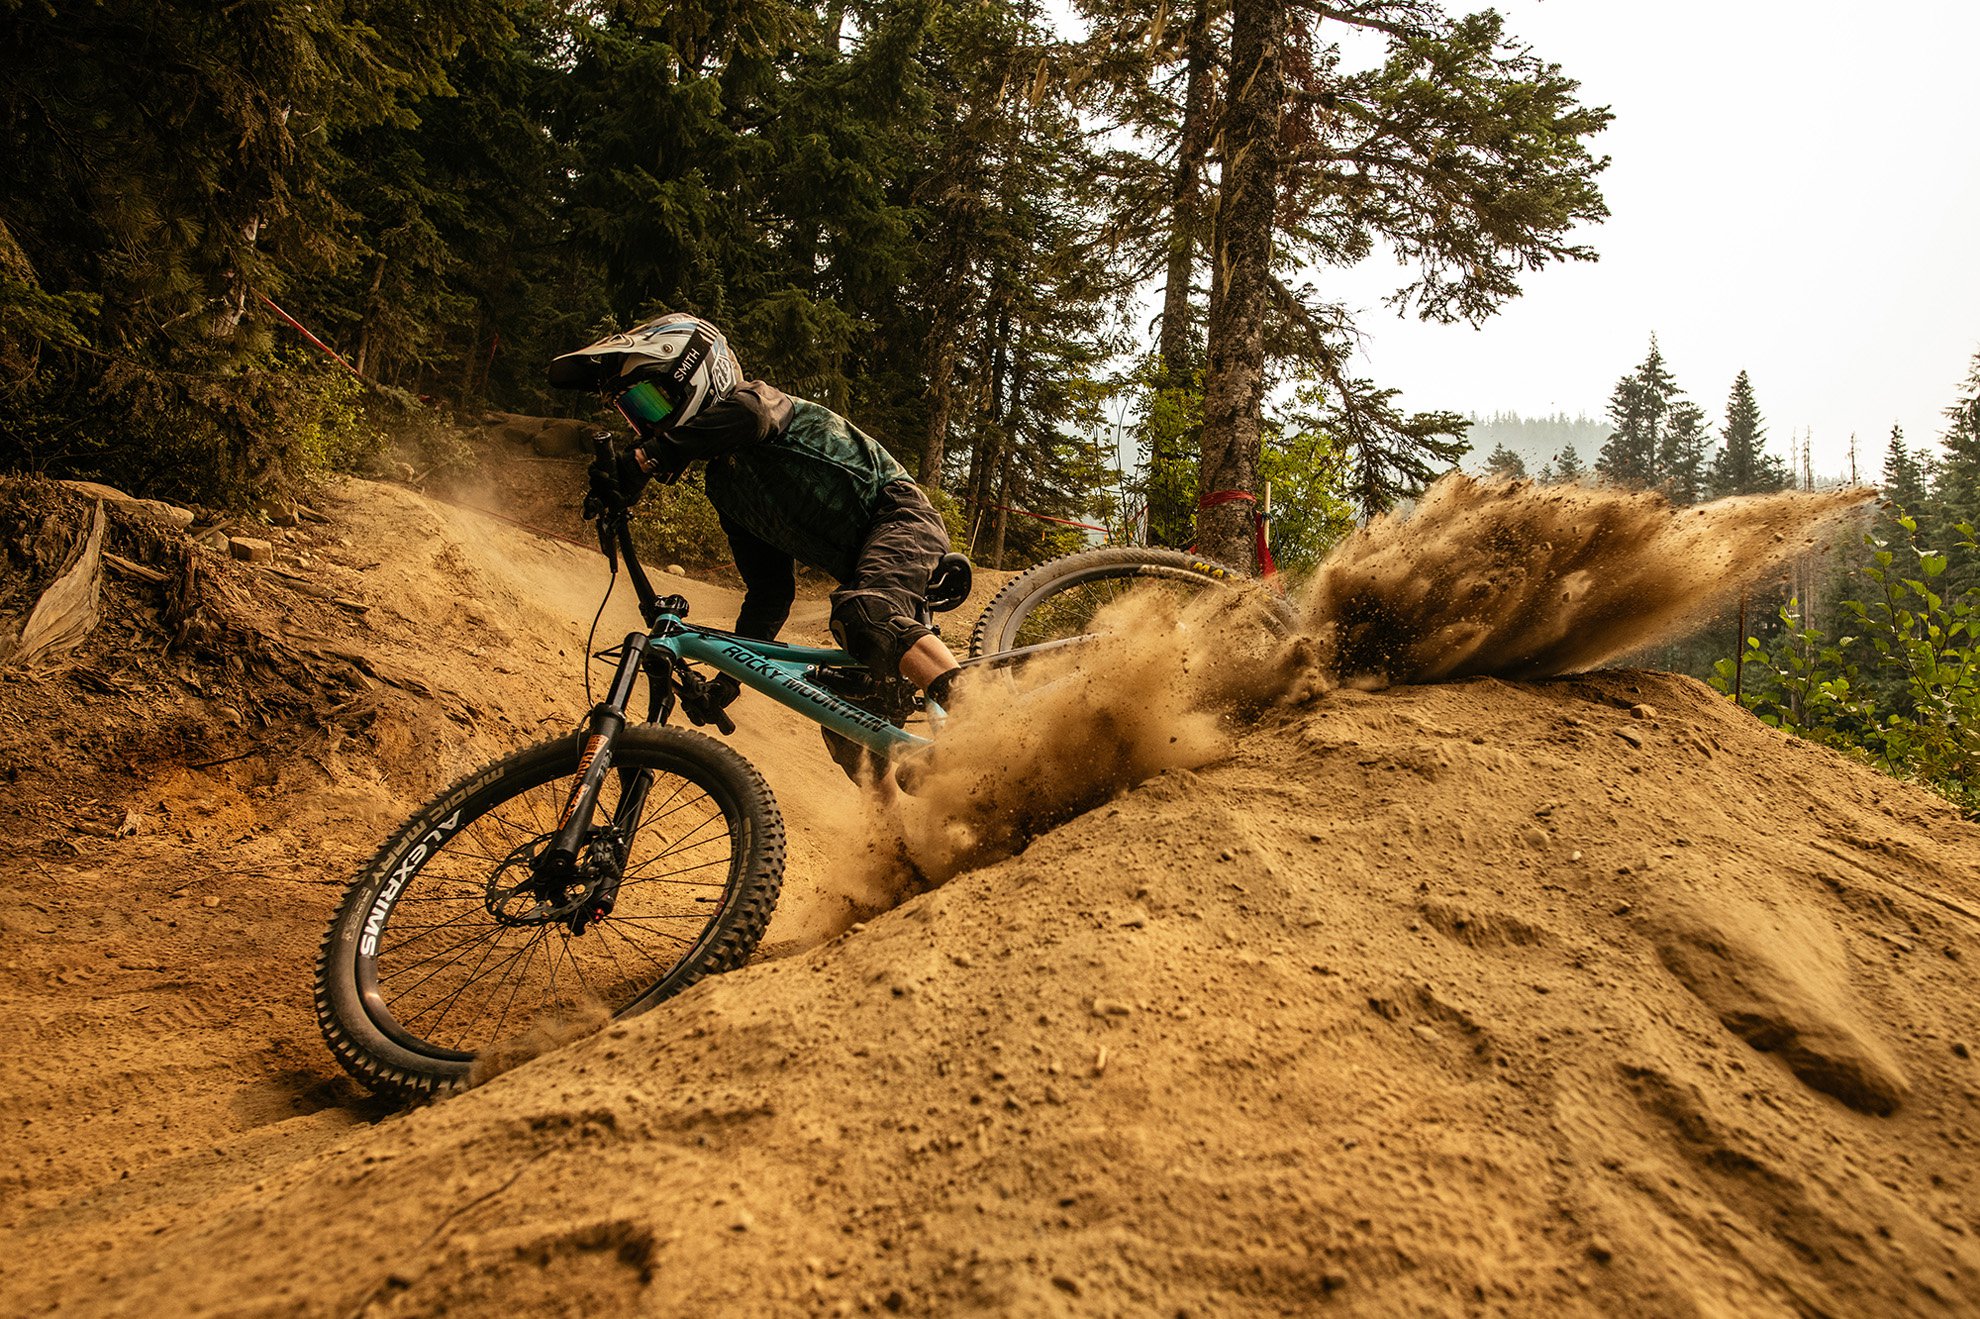 mountain bike (invades and destroys wildlife habitat)